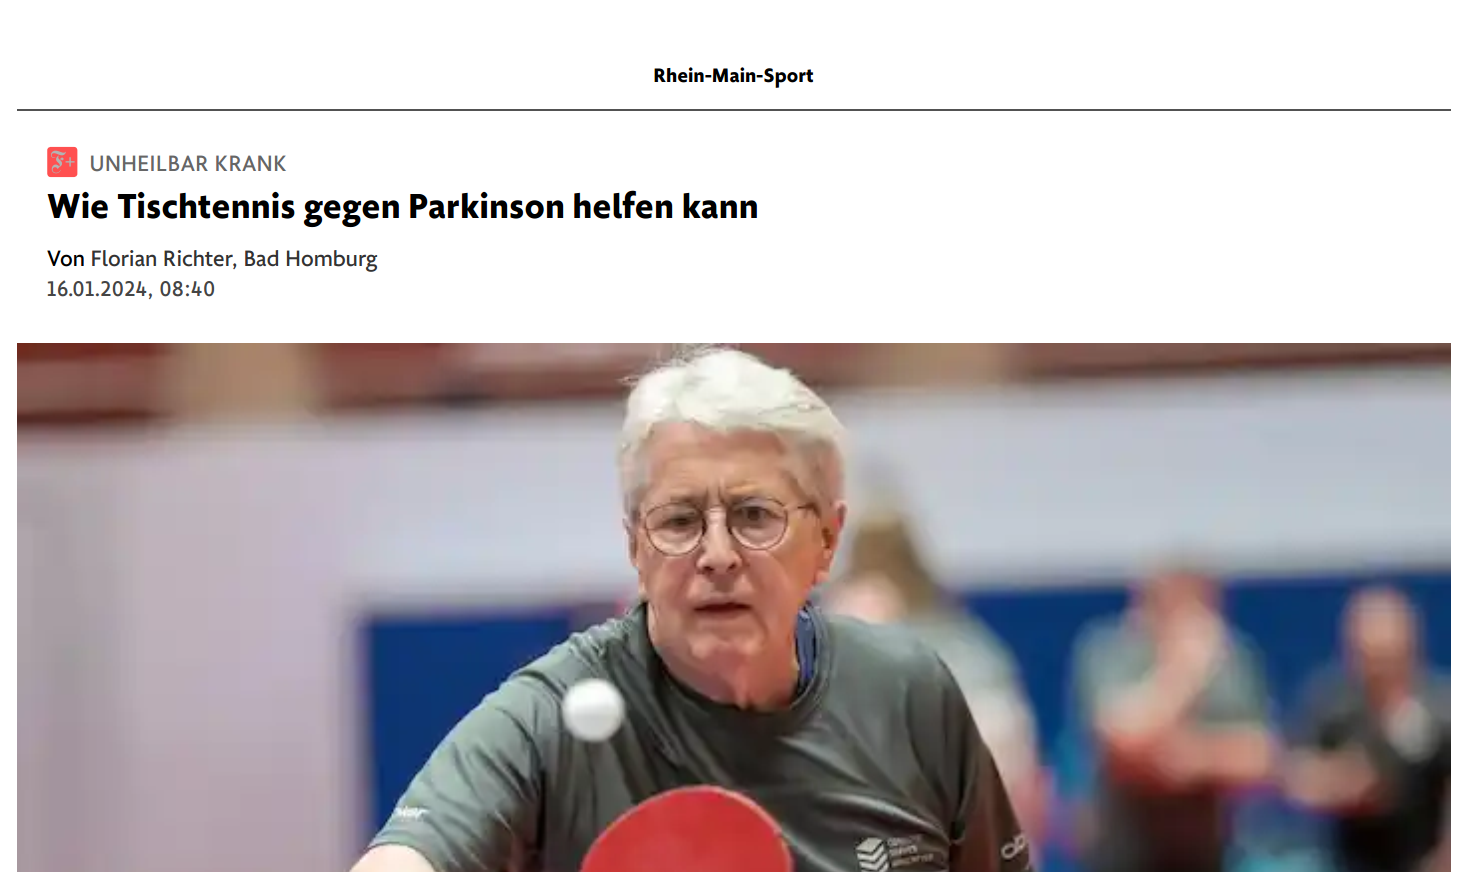 UNHEILBAR KRANK – Wie Tischtennis gegen Parkinson helfen kann